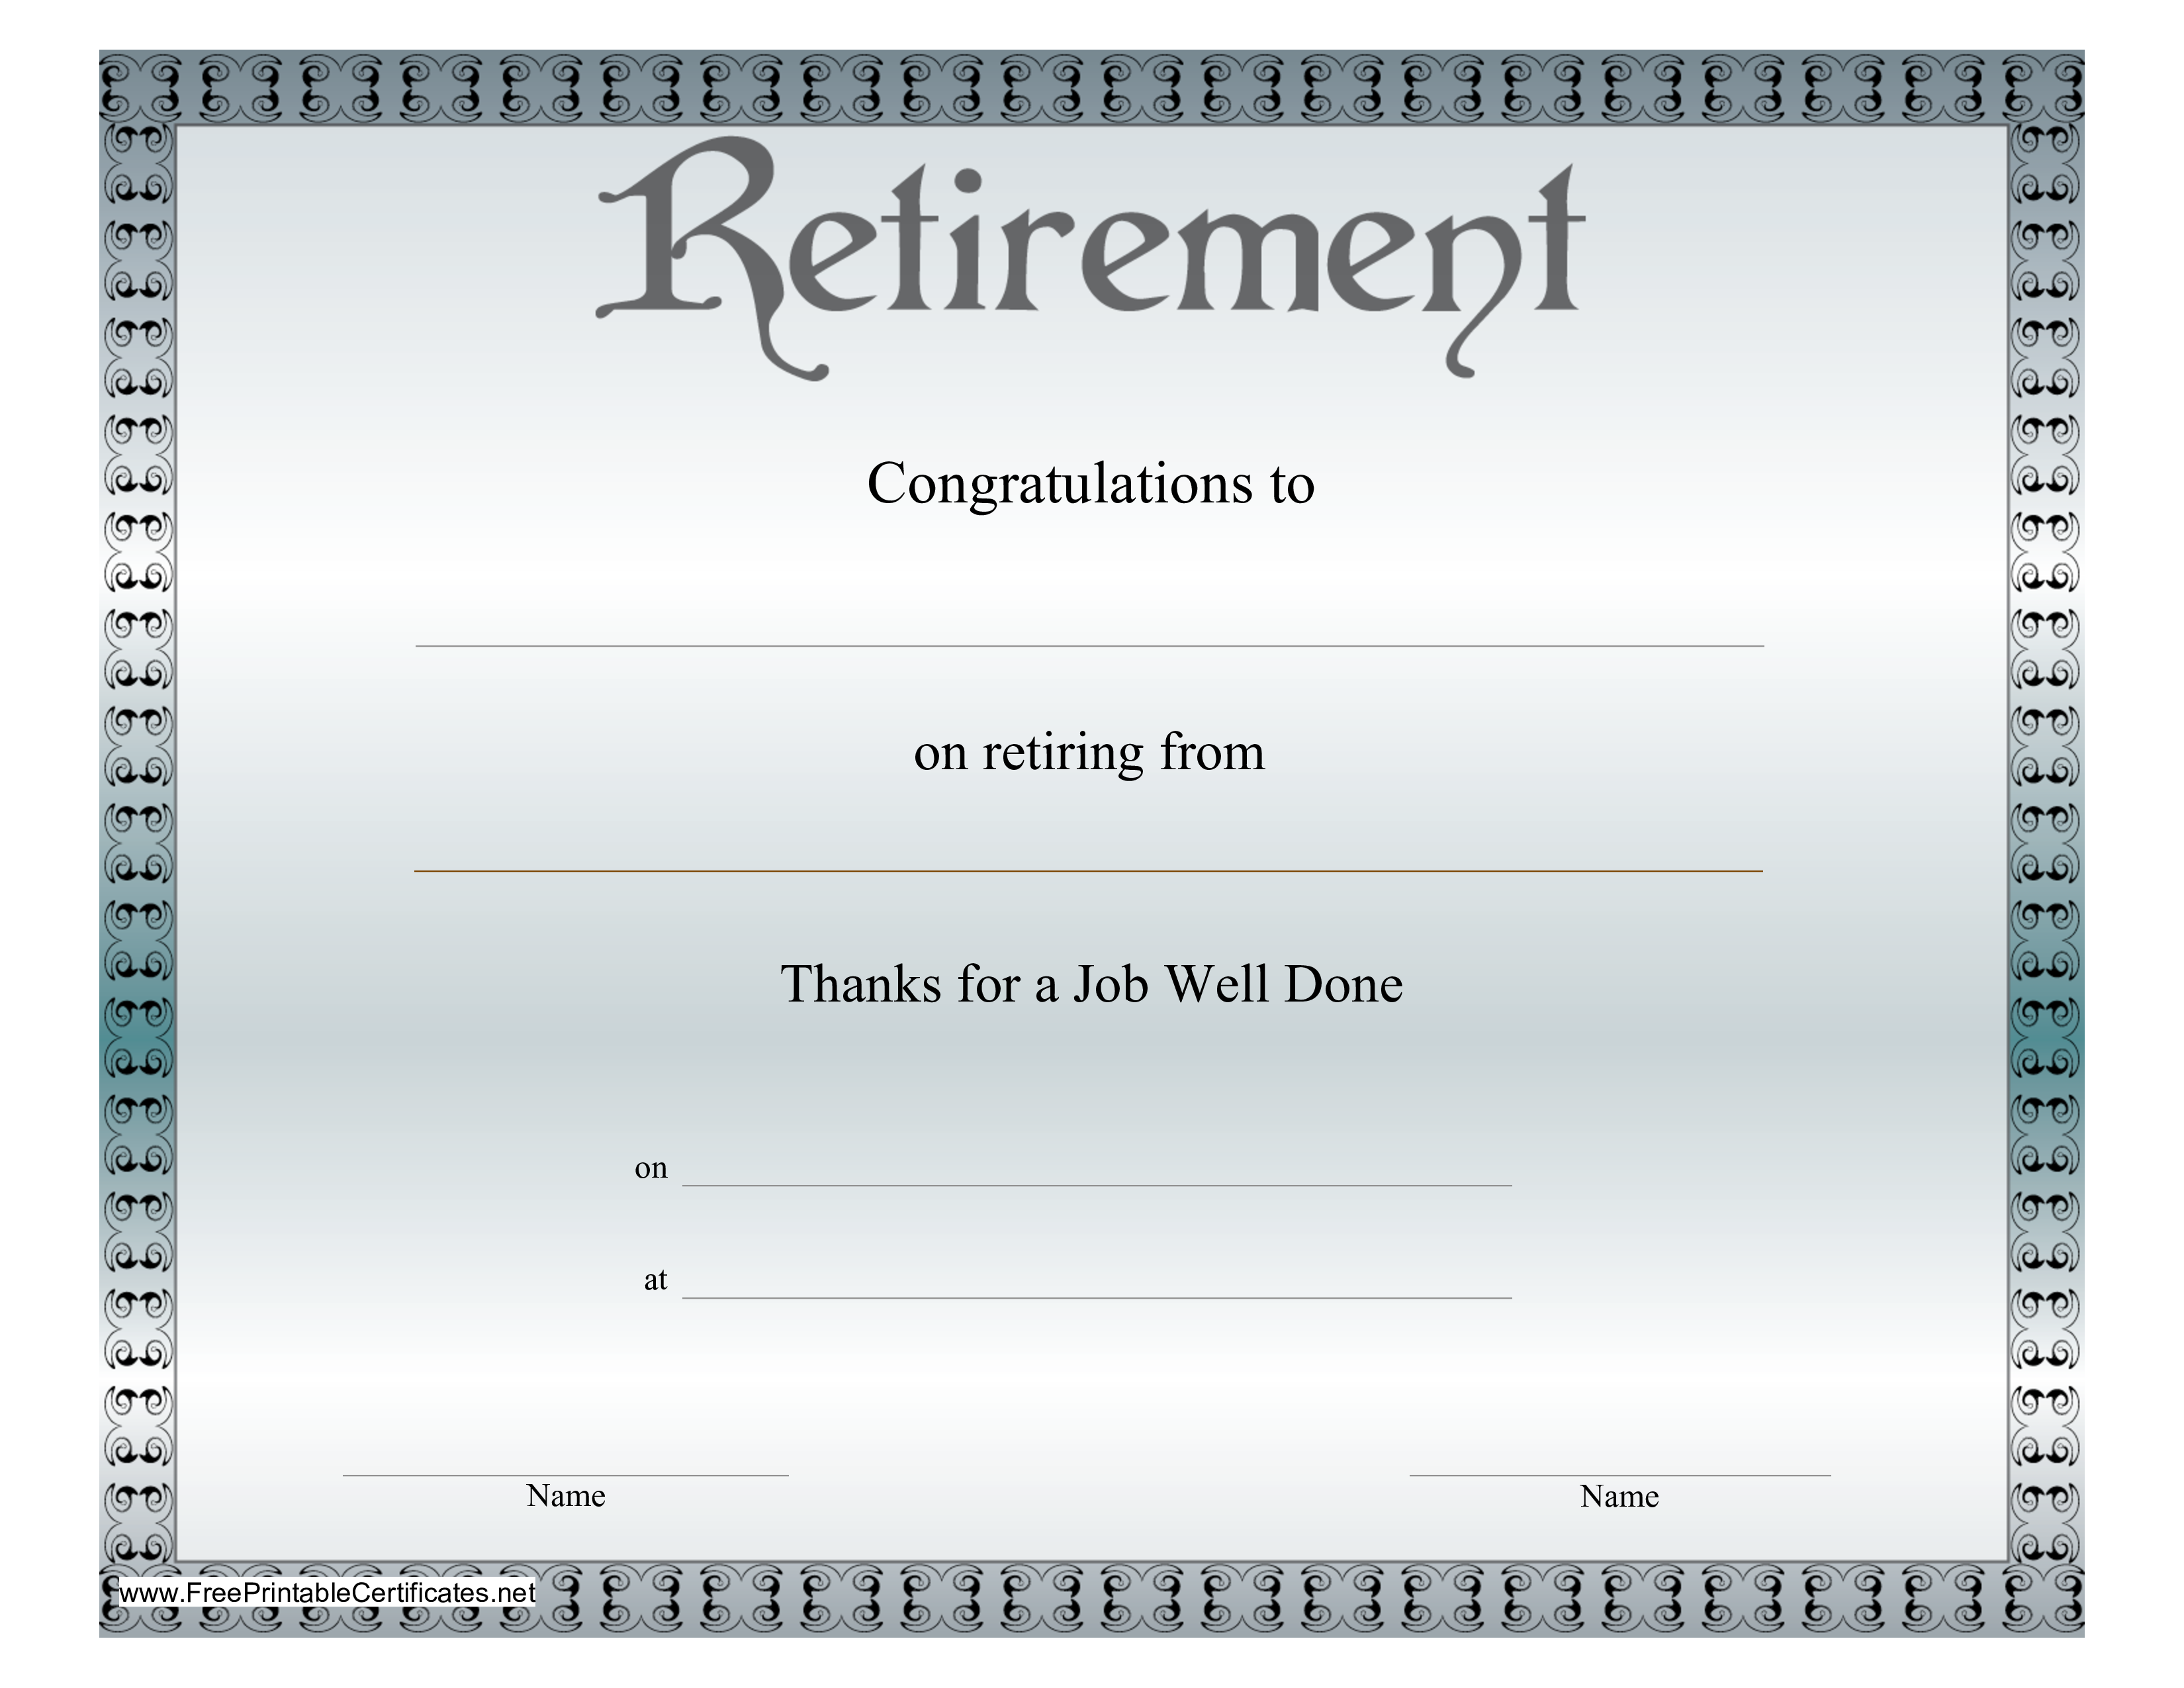 Retirement Certificate  Templates at allbusinesstemplates.com For Congratulations Certificate Word Template